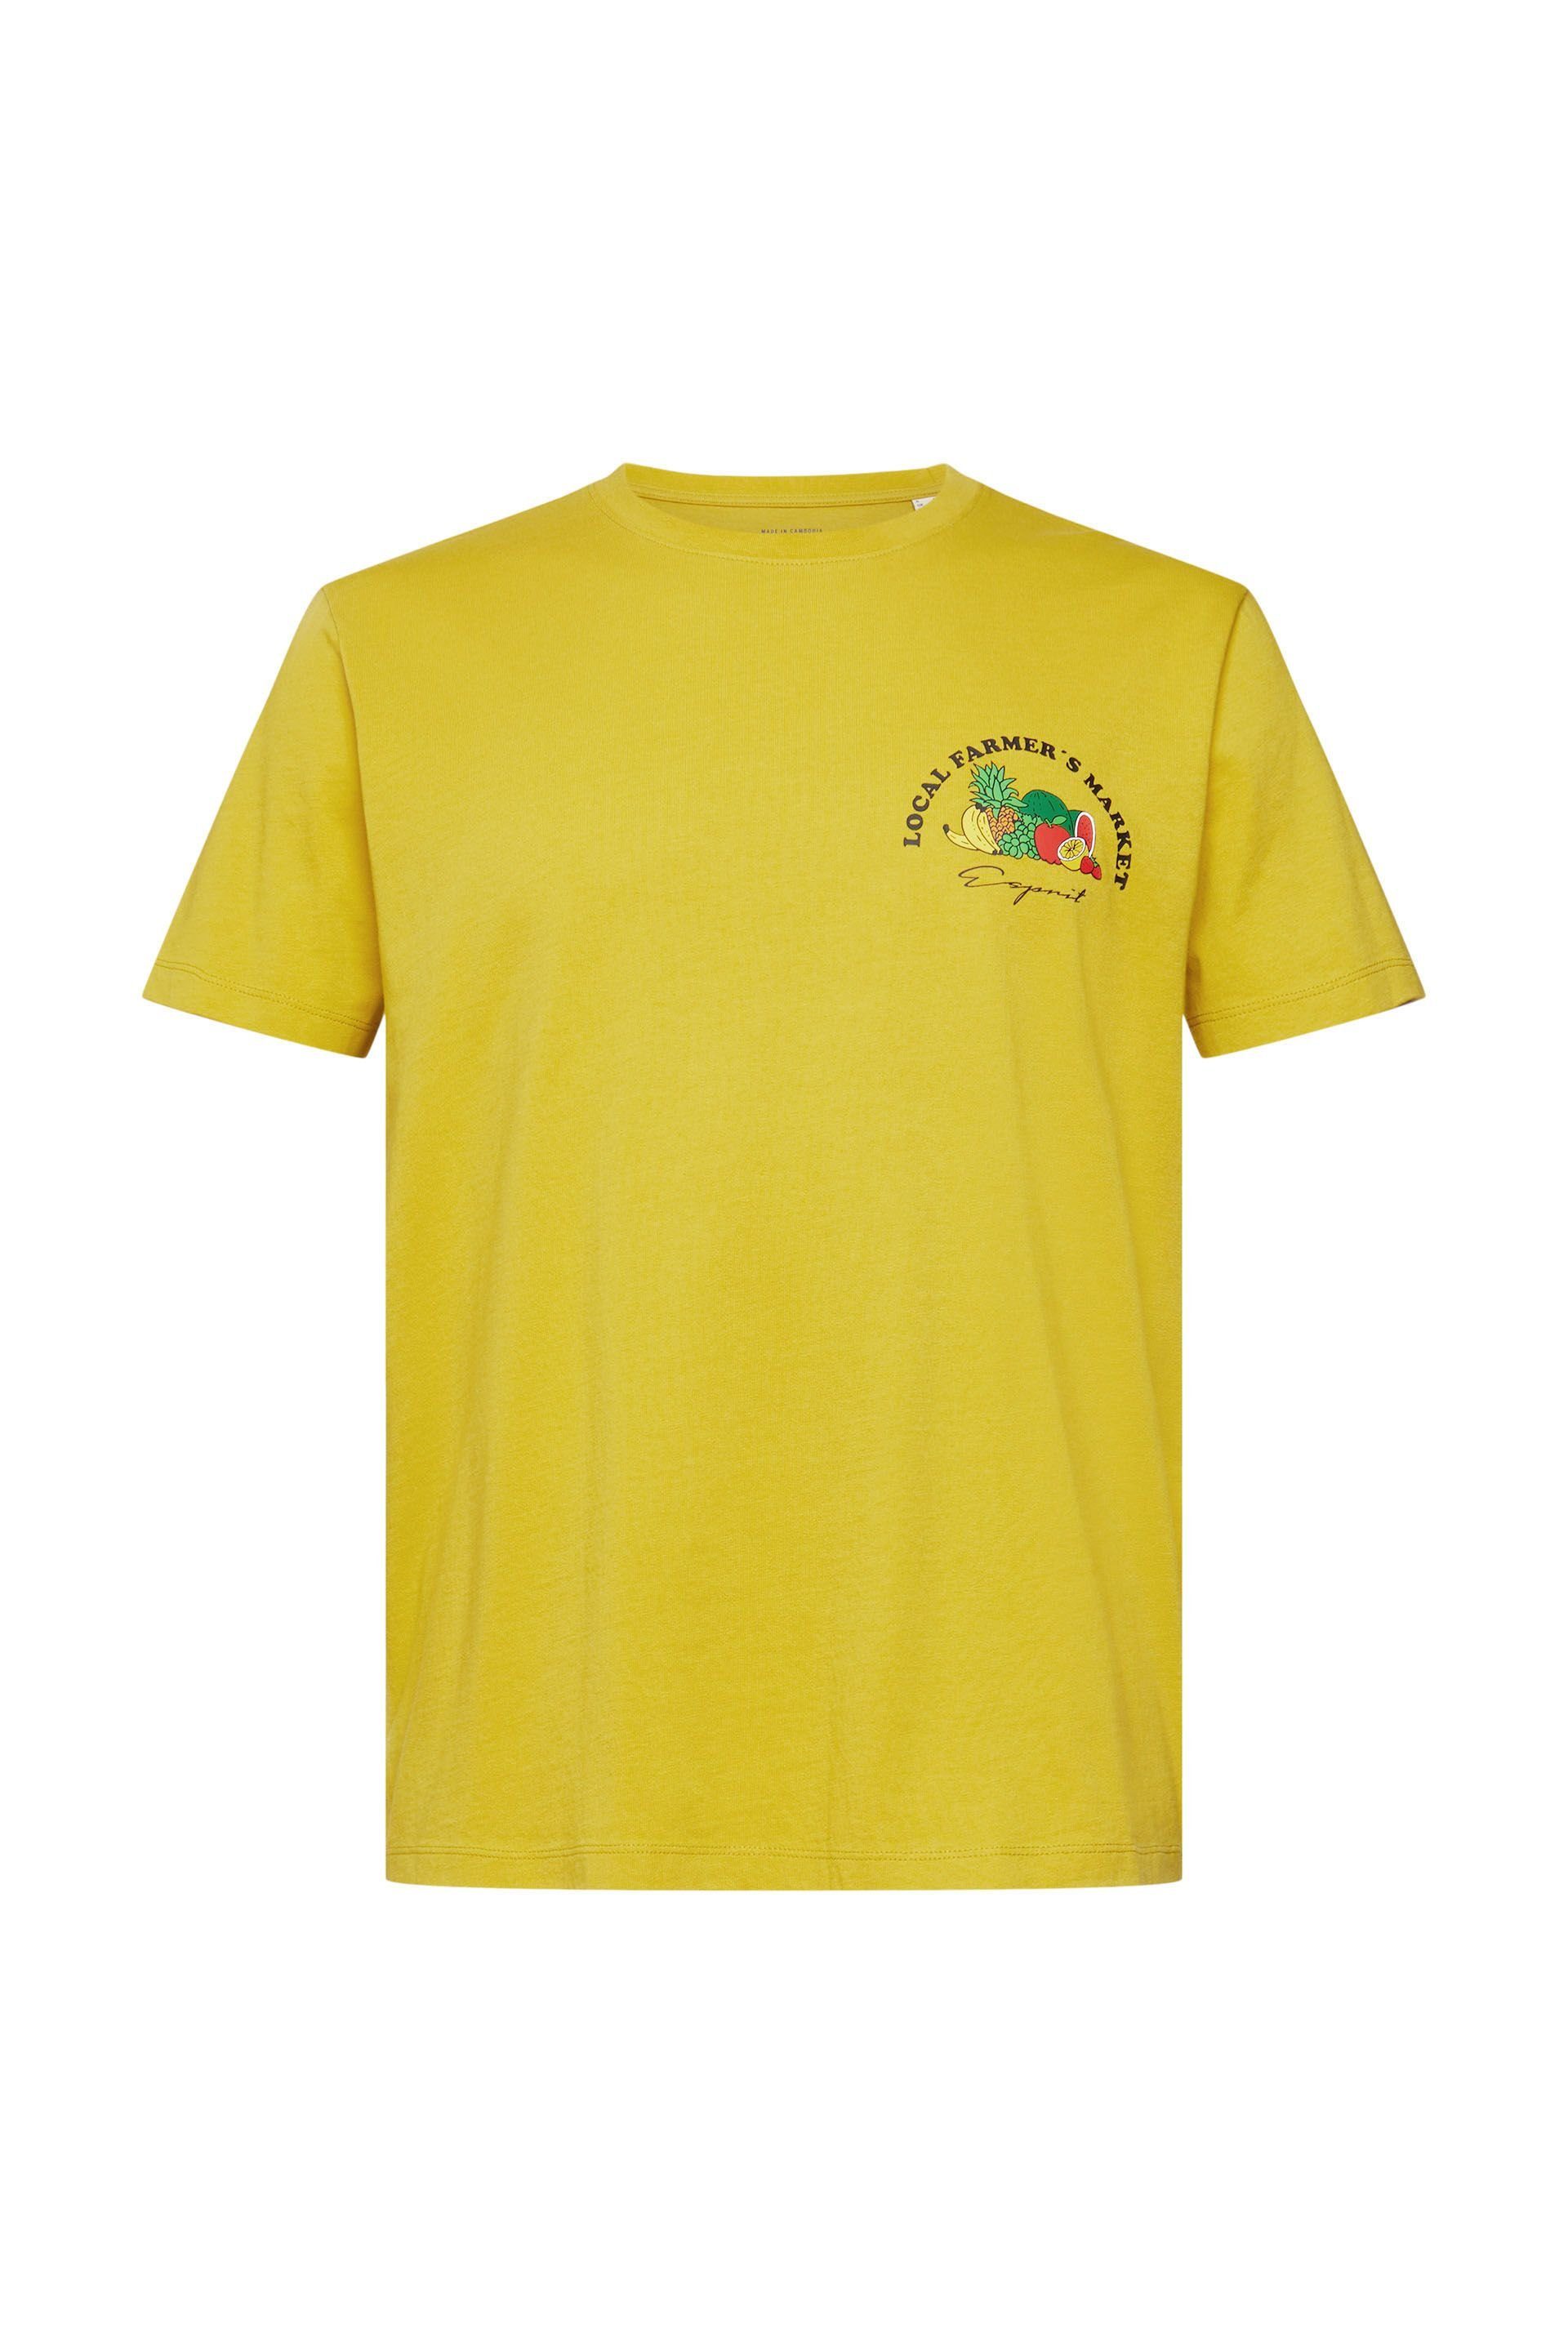 Esprit T-Shirt dusty yellow